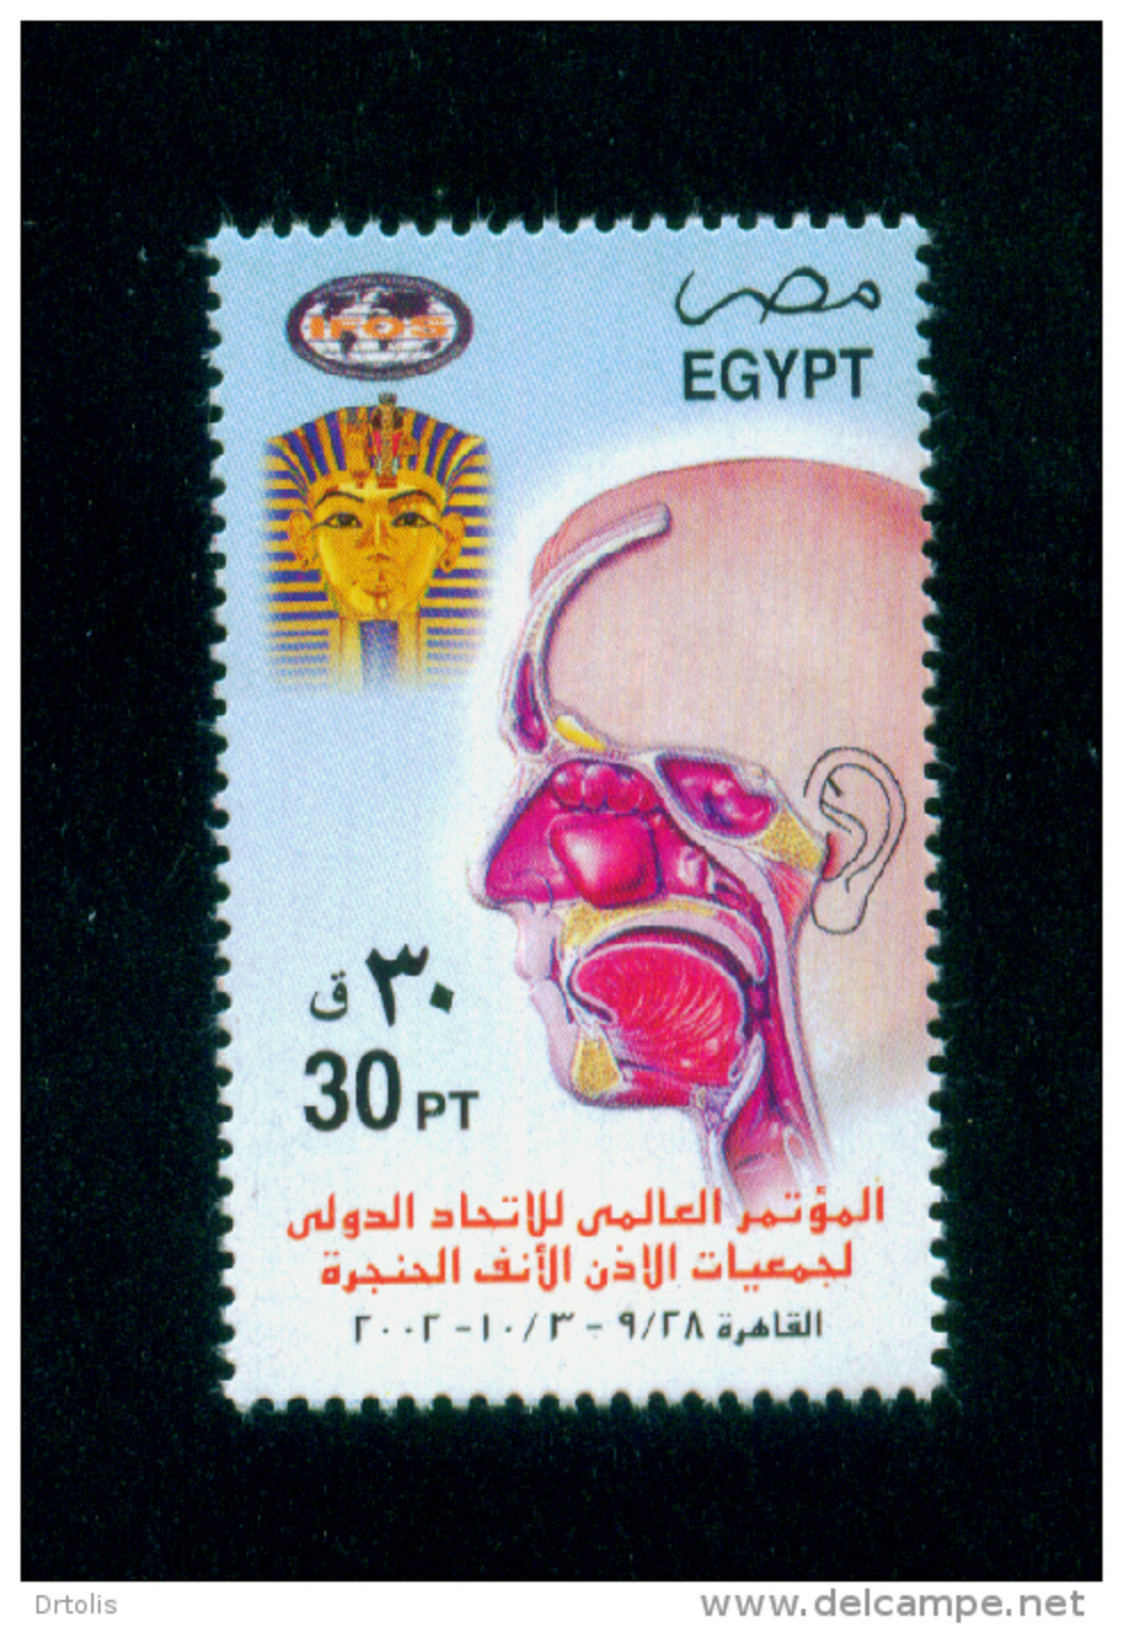 EGYPT / 2002 / MEDICINE / EAR / NOSE / OTO-RHINO LARYNGOLOGICAL SOCIETIES / IFOS / EGYPTOLOGY / TUTANKHAMUN / MNH / VF - Nuovi